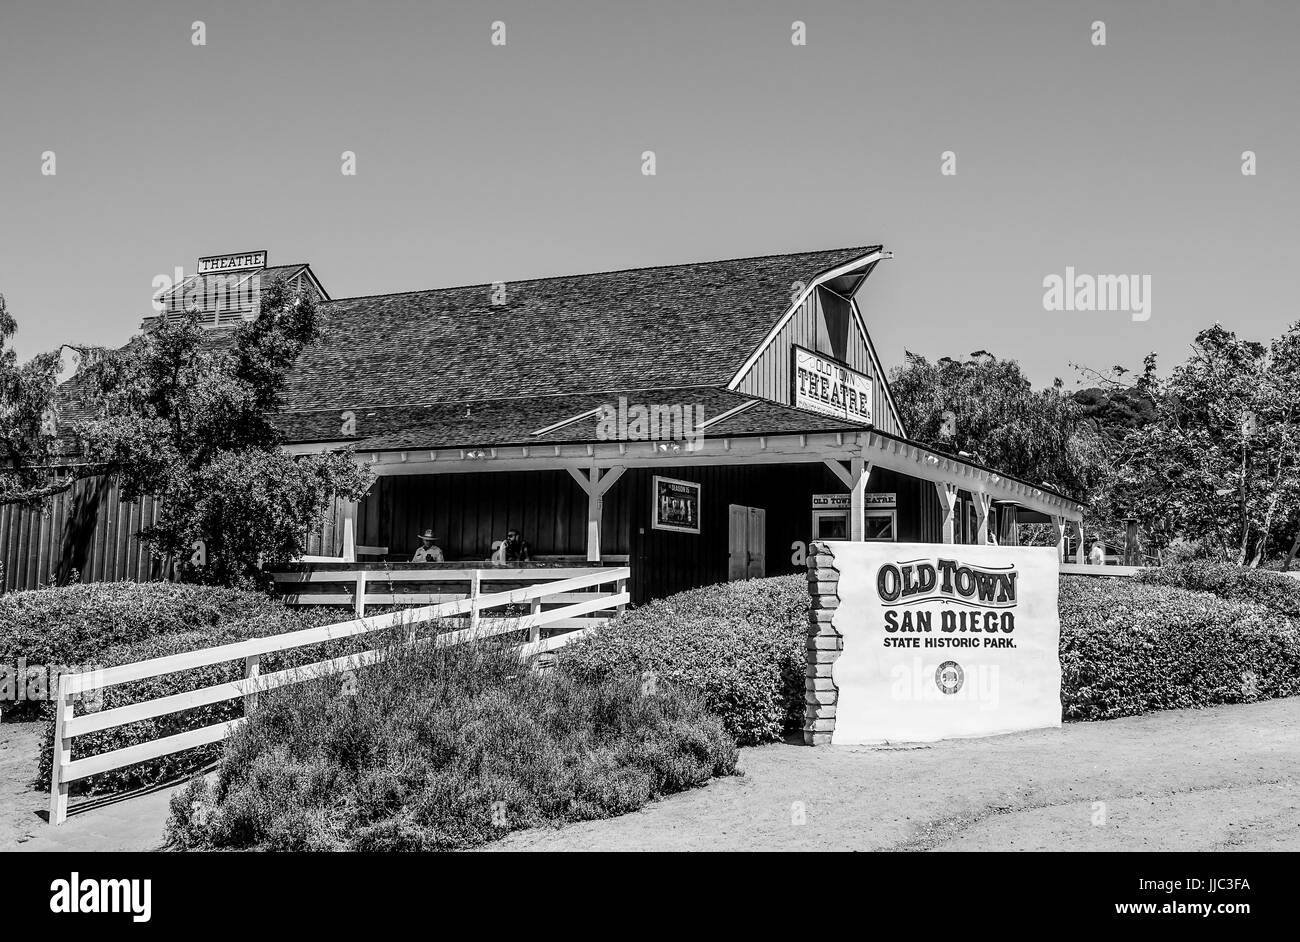 San Diego Old Town State Historic Park - SAN DIEGO - CALIFORNIA - APRIL 21, 2017 Stock Photo